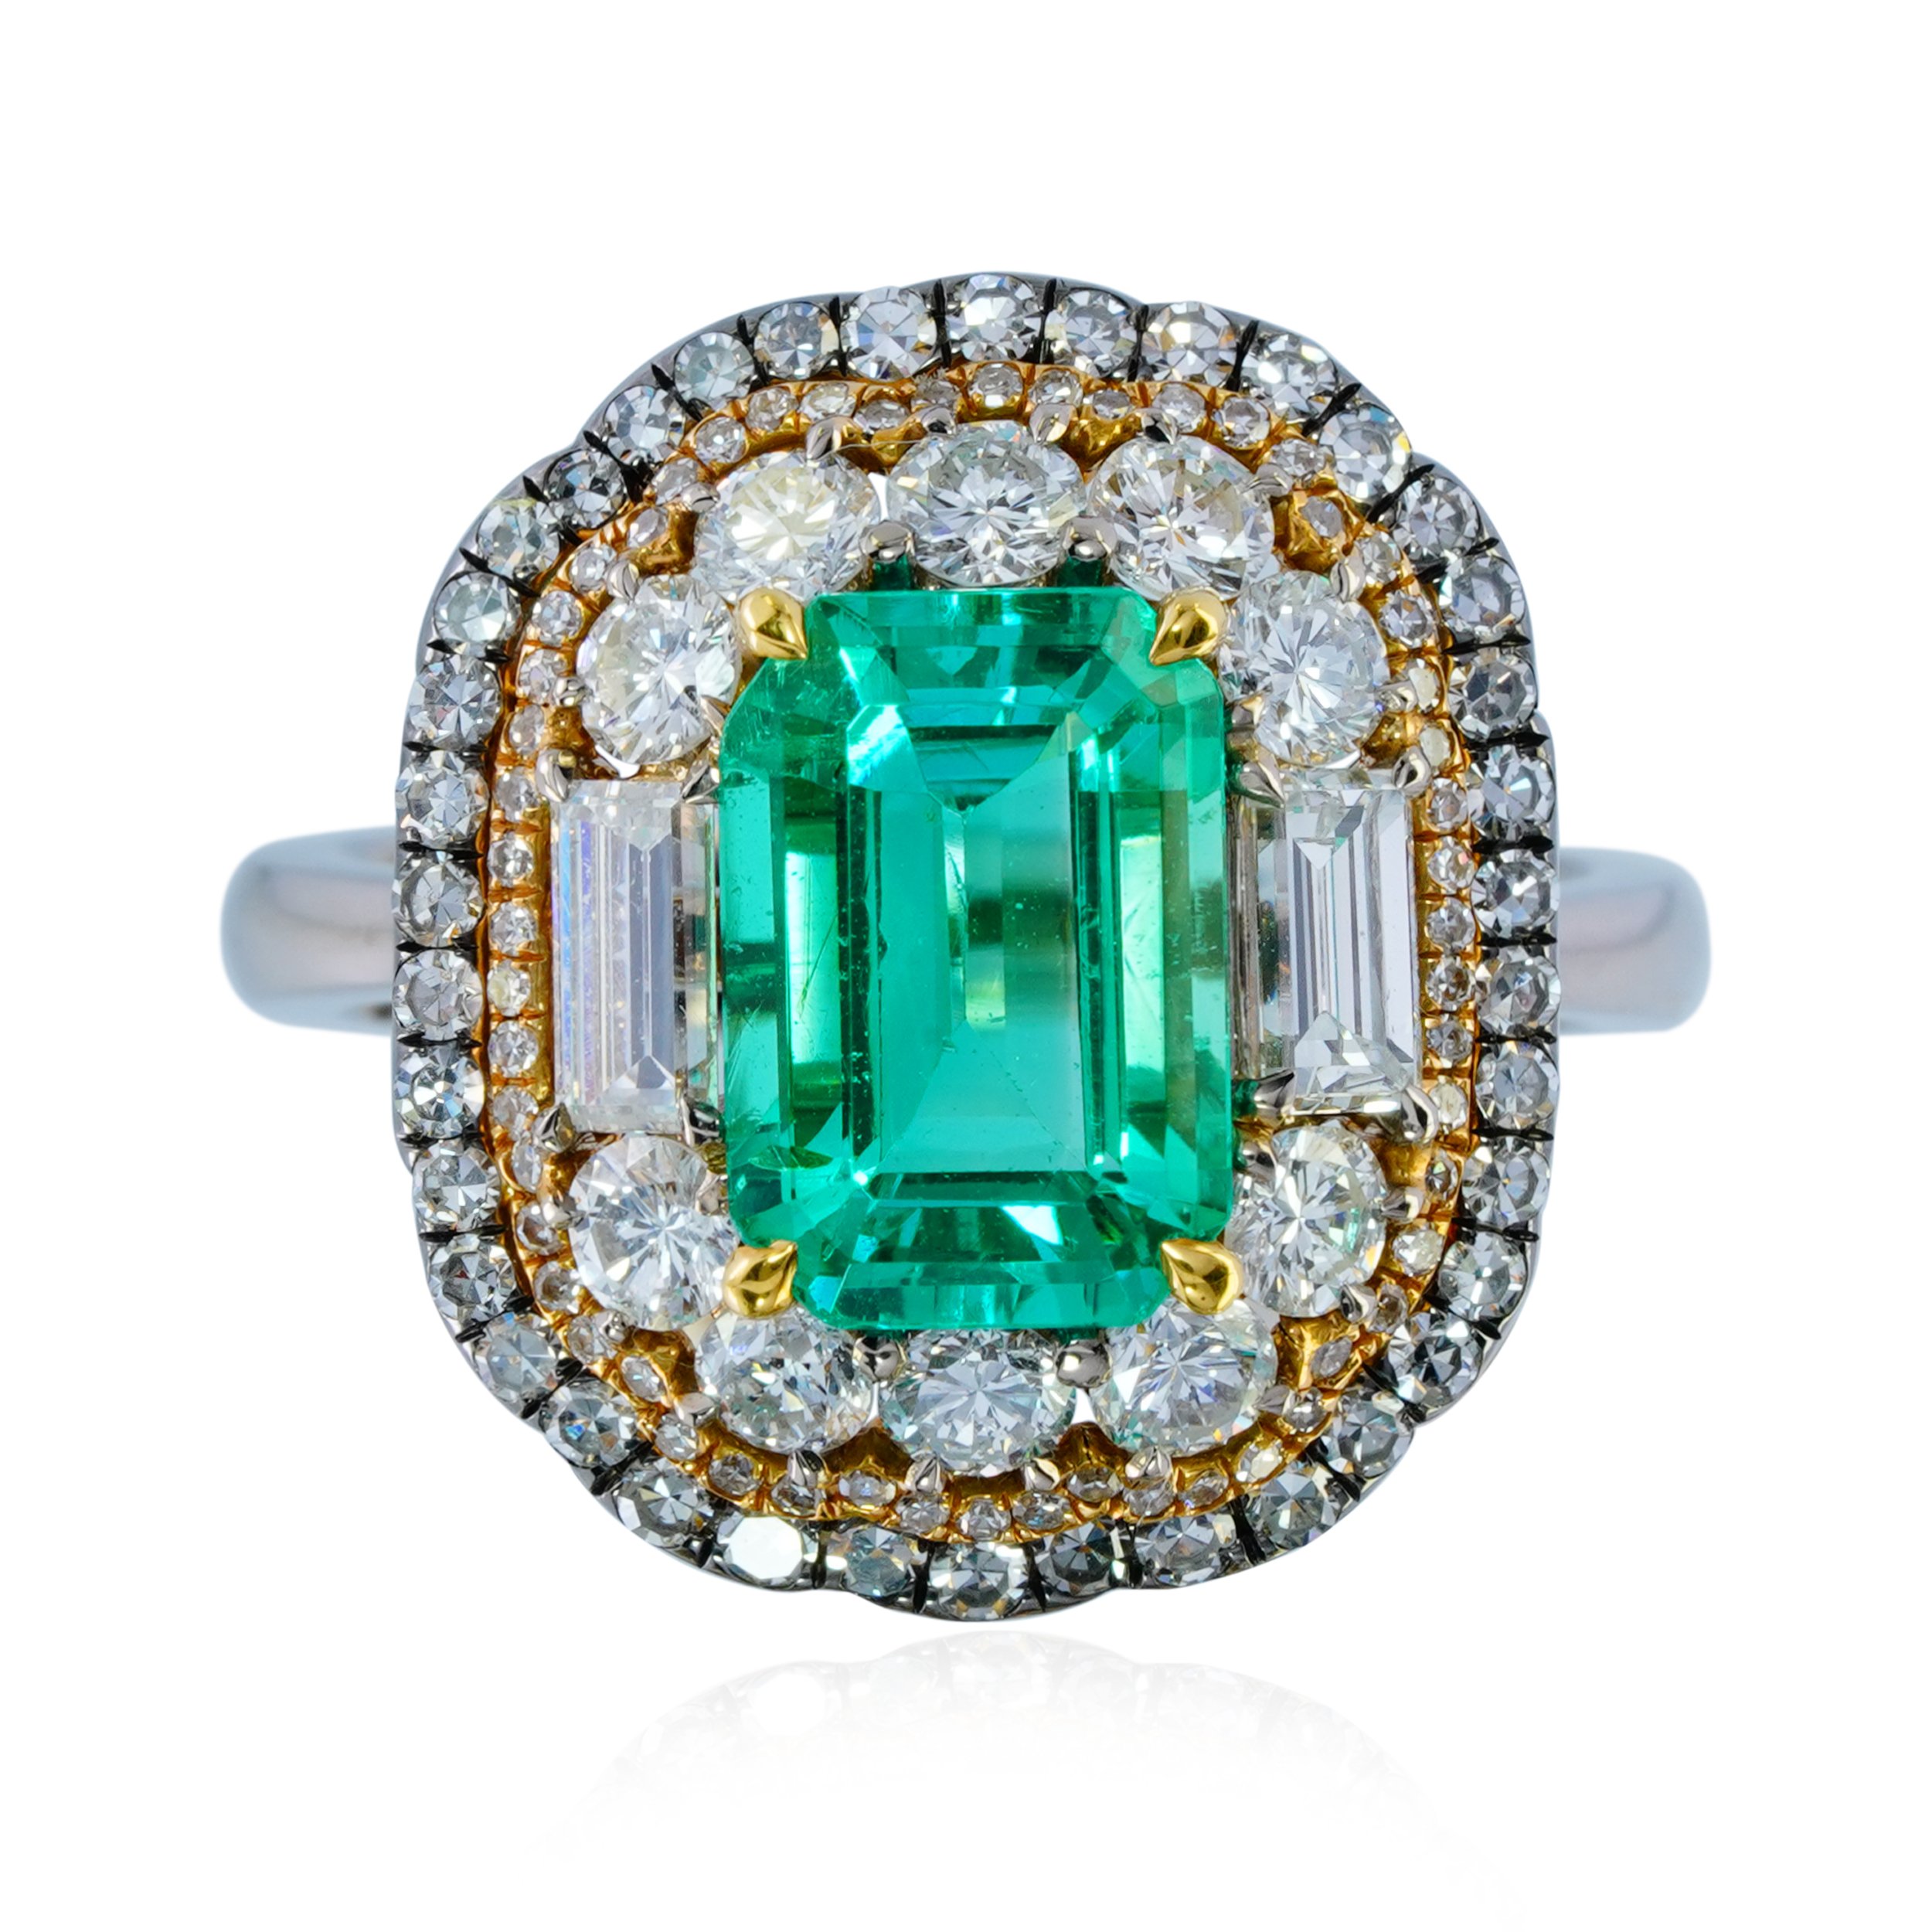 IVY New York x Gemfields Emerald and Diamond Layered Ring.jpg